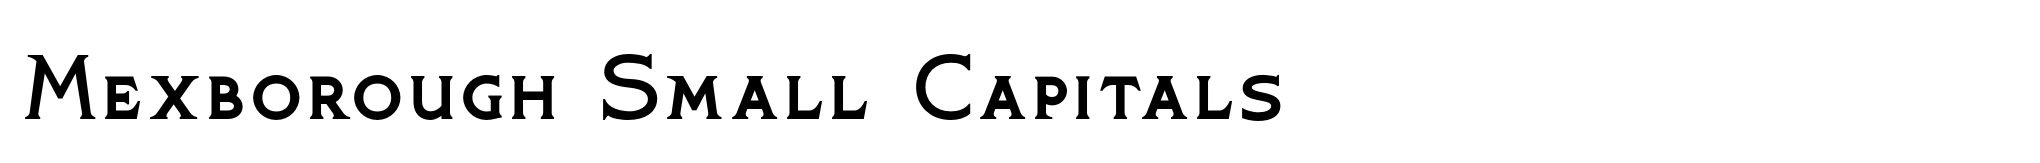 Mexborough Small Capitals image